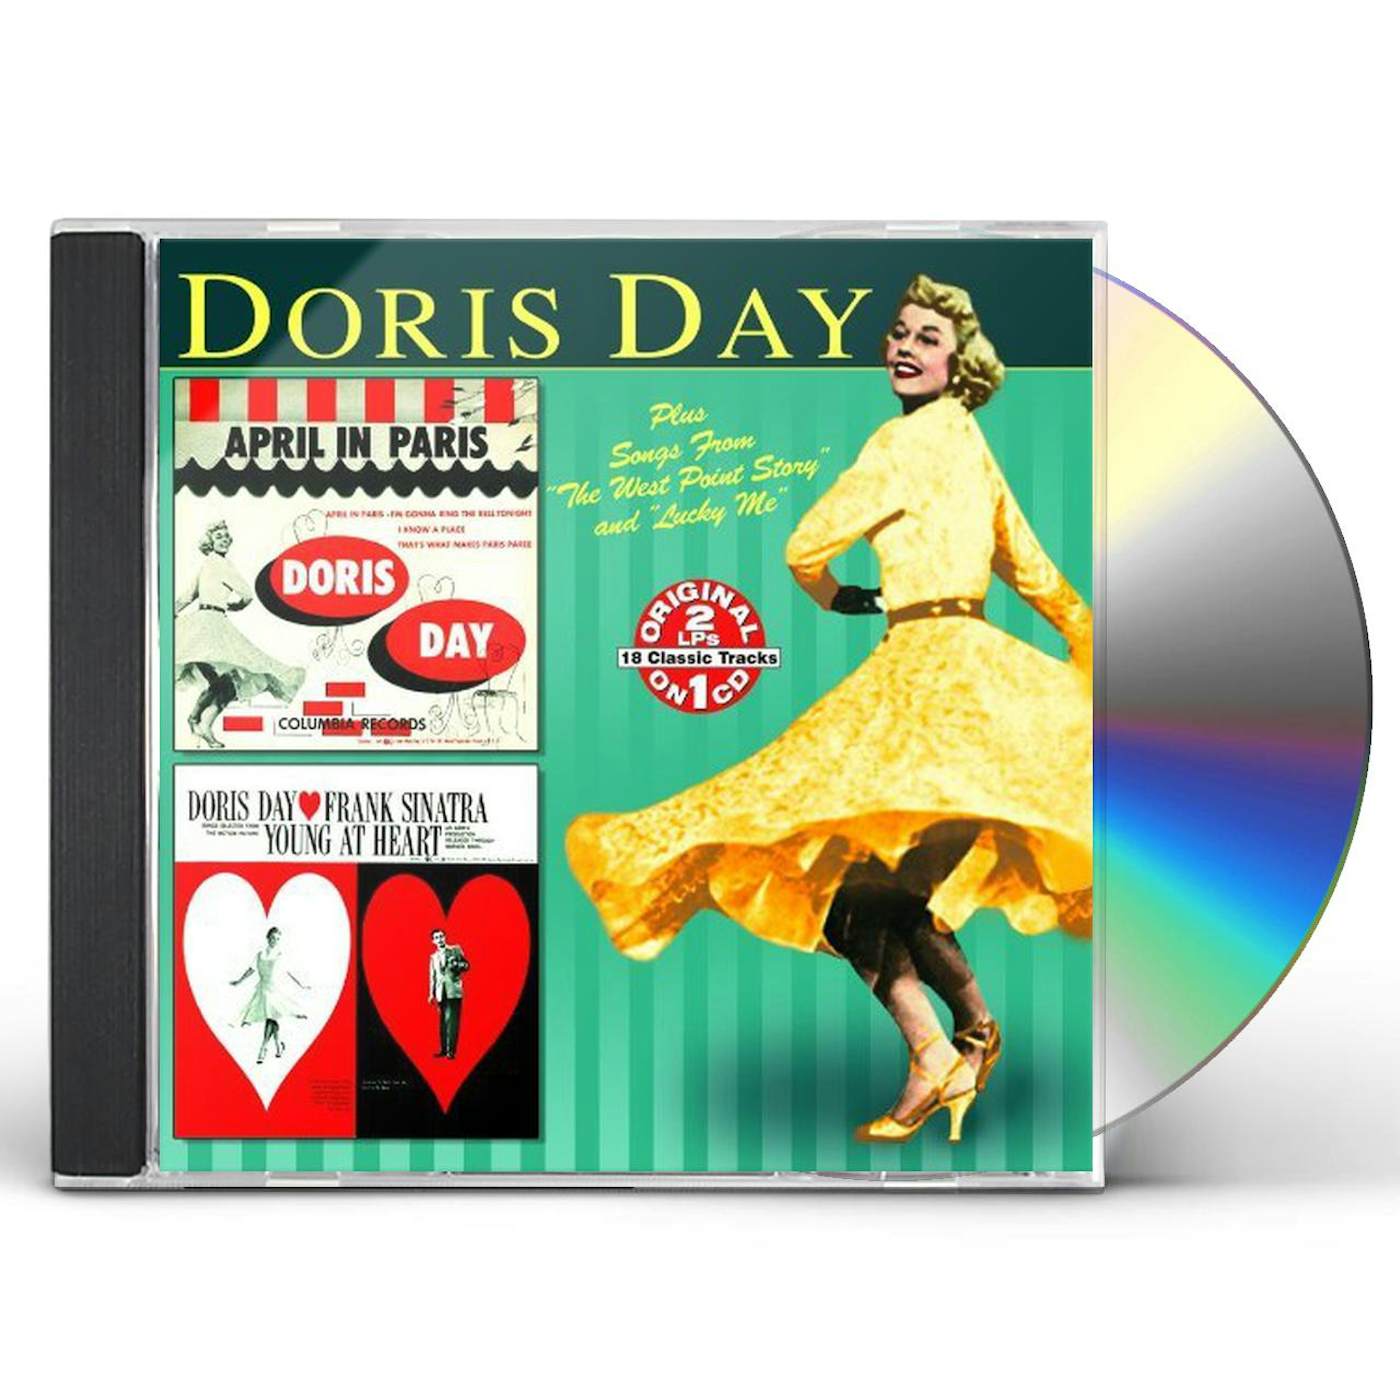 Doris Day YOUNG AT HEART: APRIL IN PARIS CD